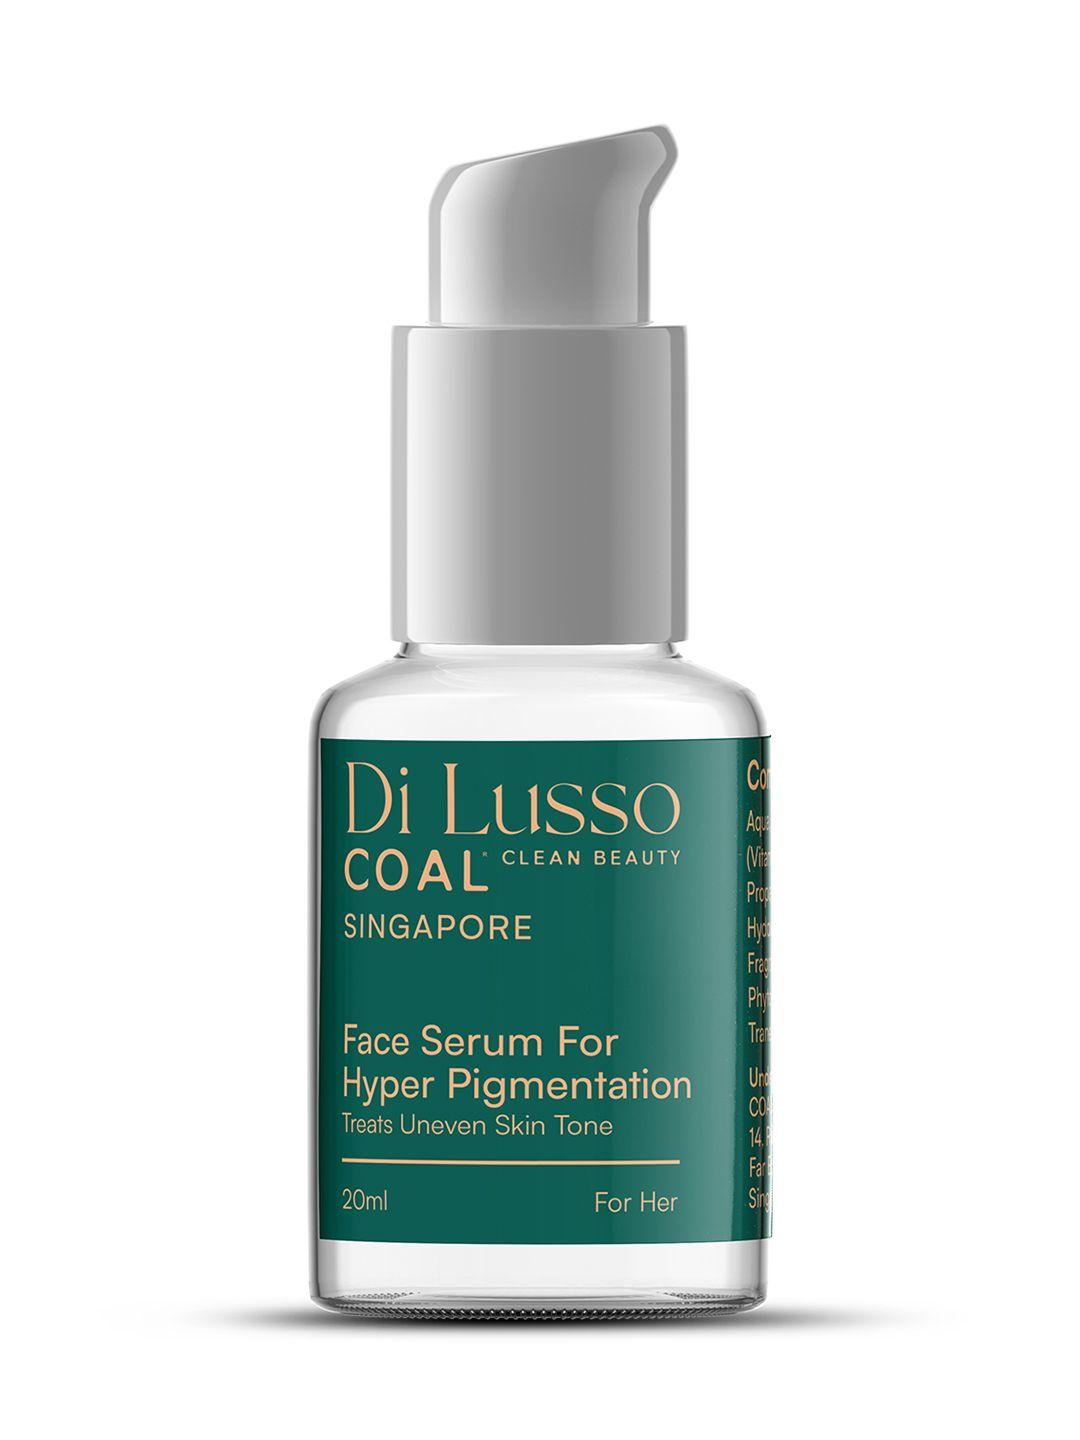 coal clean beauty di lusso singapore face serum for hyper pigmentation - 20ml